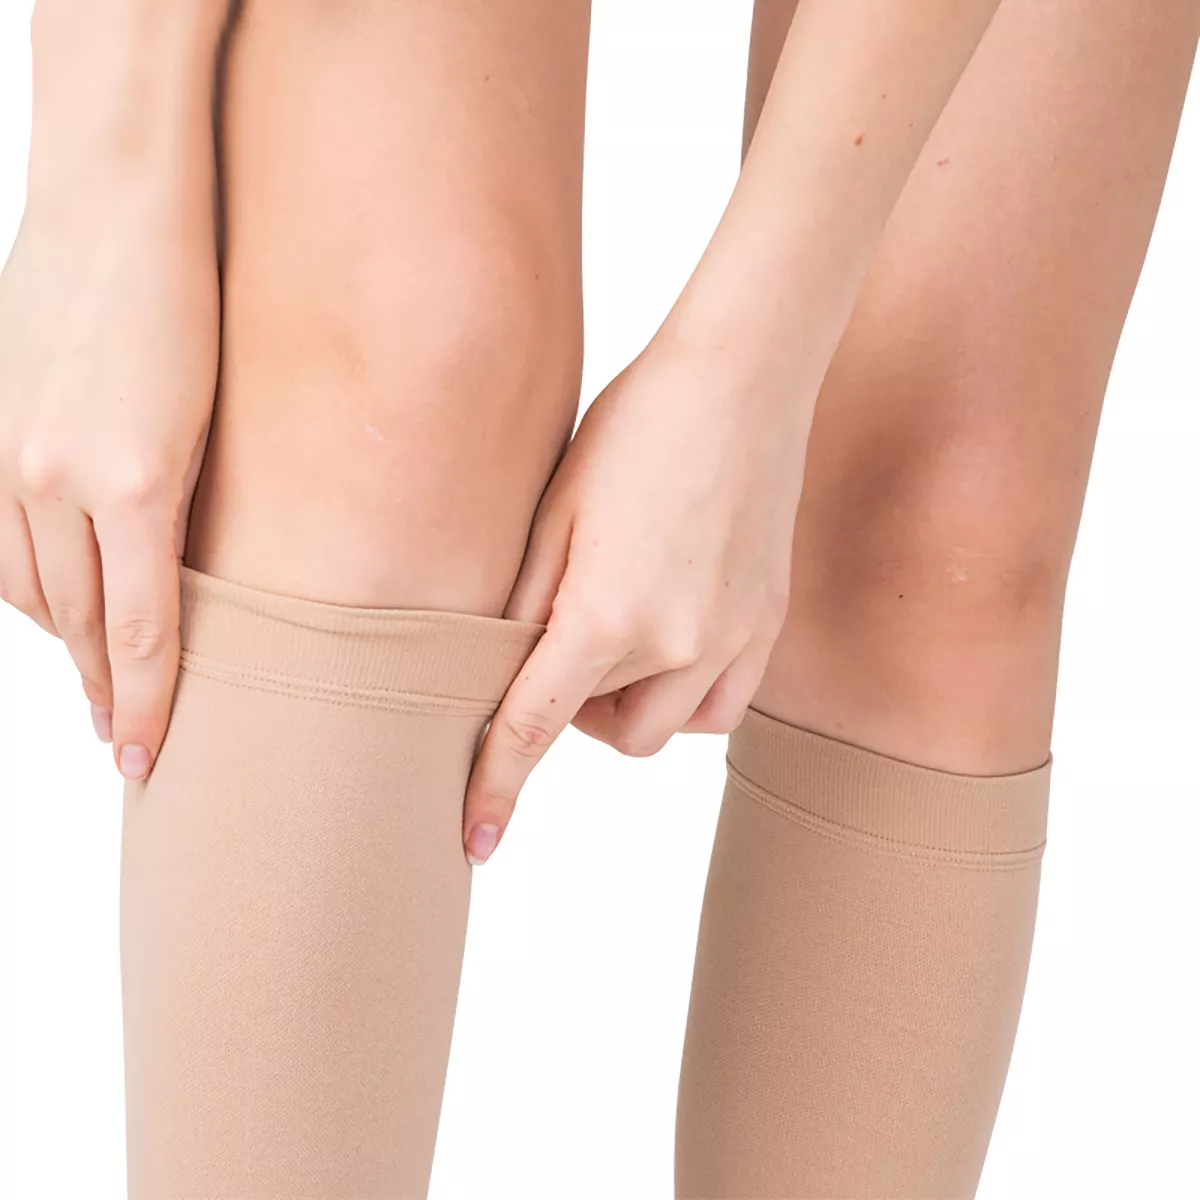 Varcoh ® 15-20 mmHg Women Knee High Closed Toe Compression Socks Beige